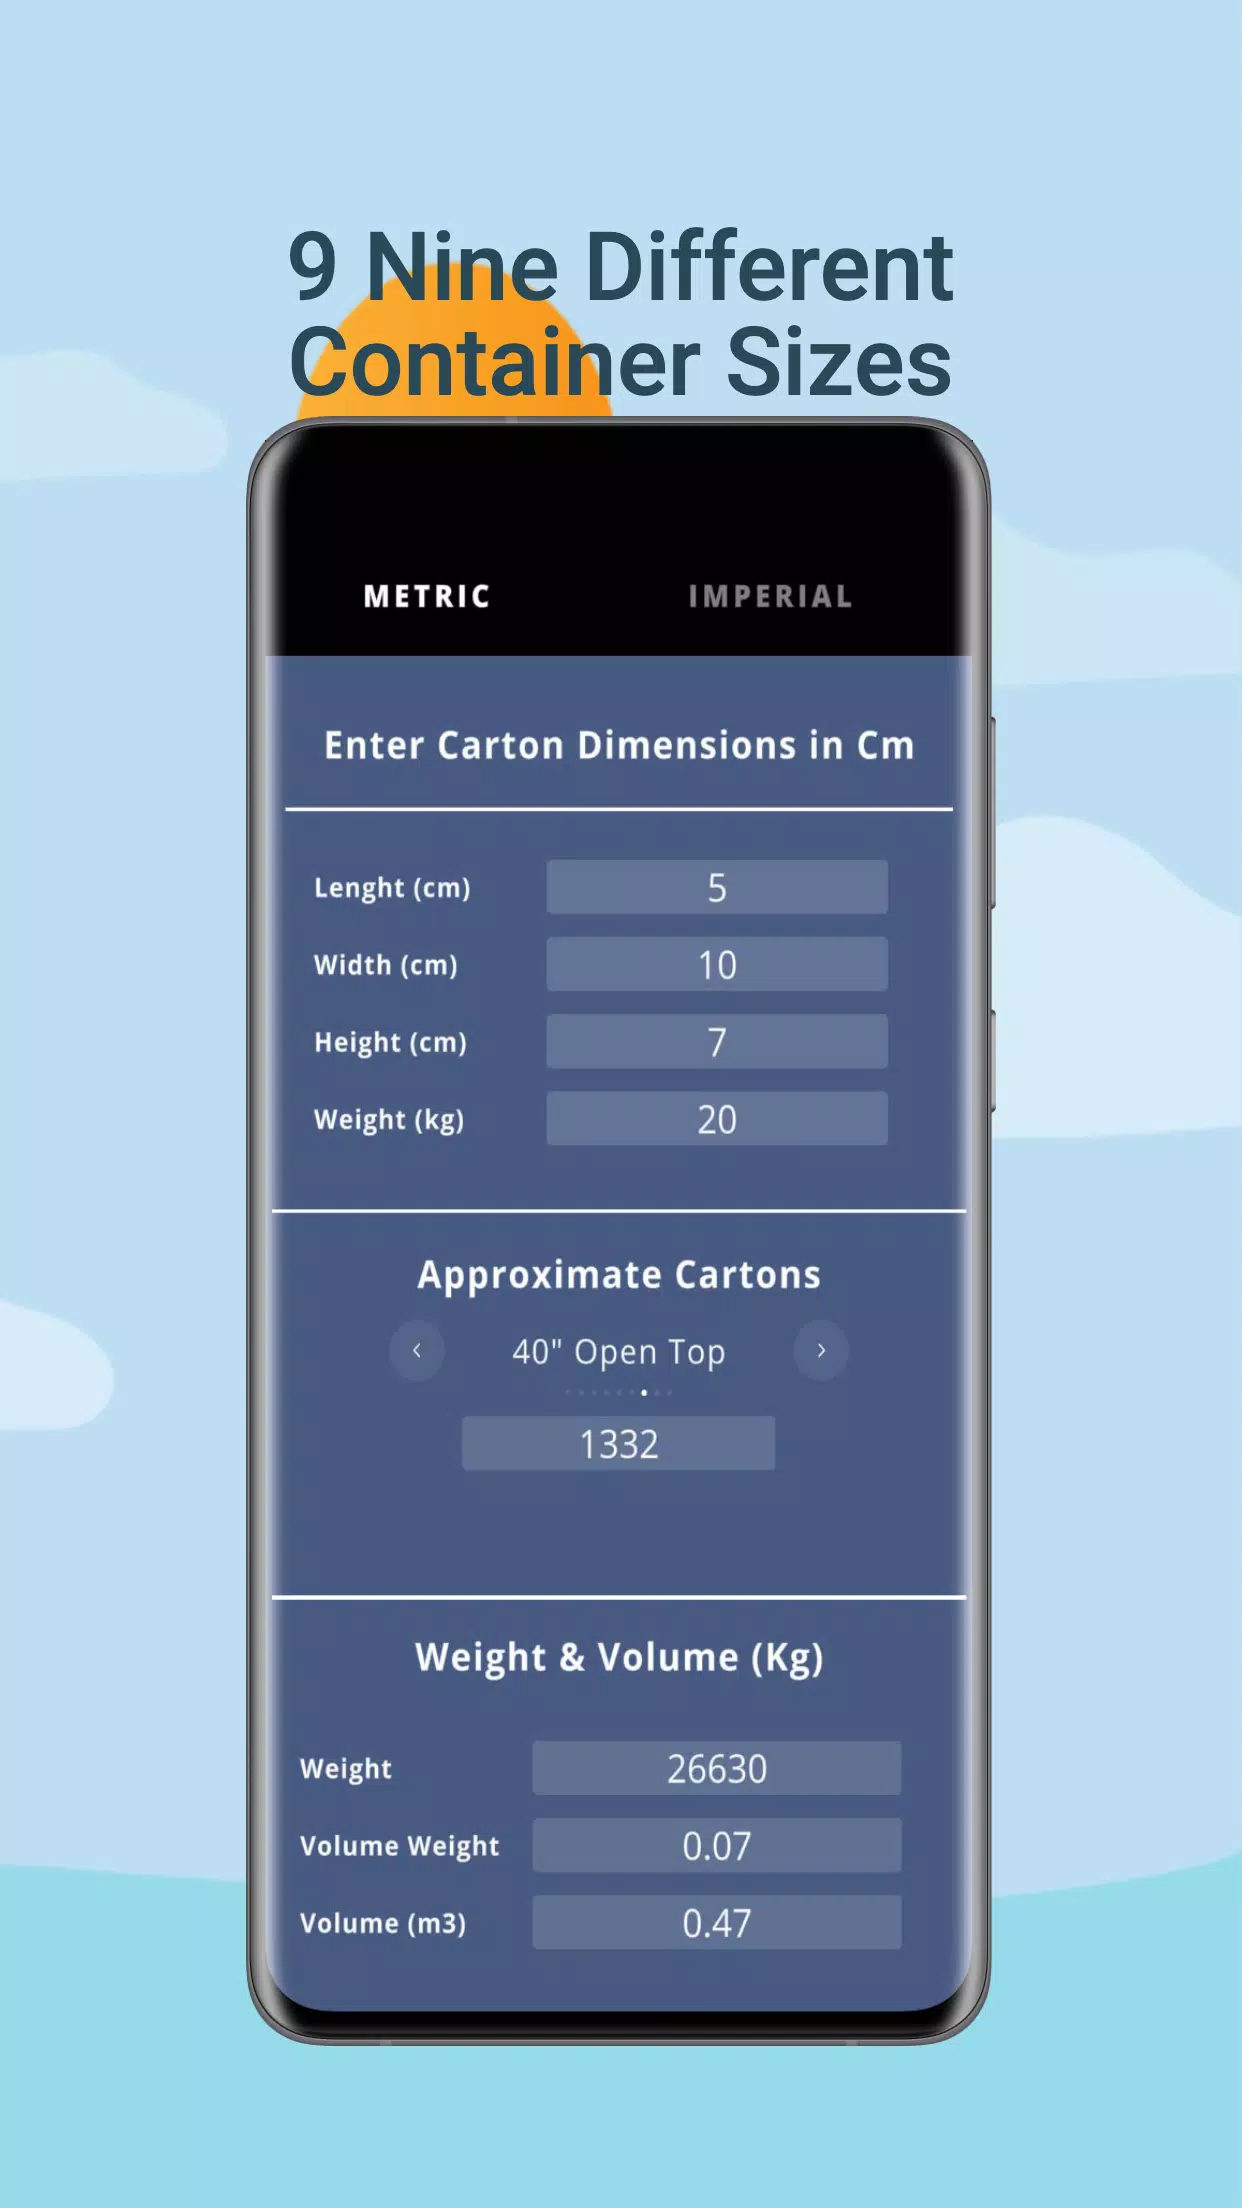 Cbm Calculator Plus APK for Android Download